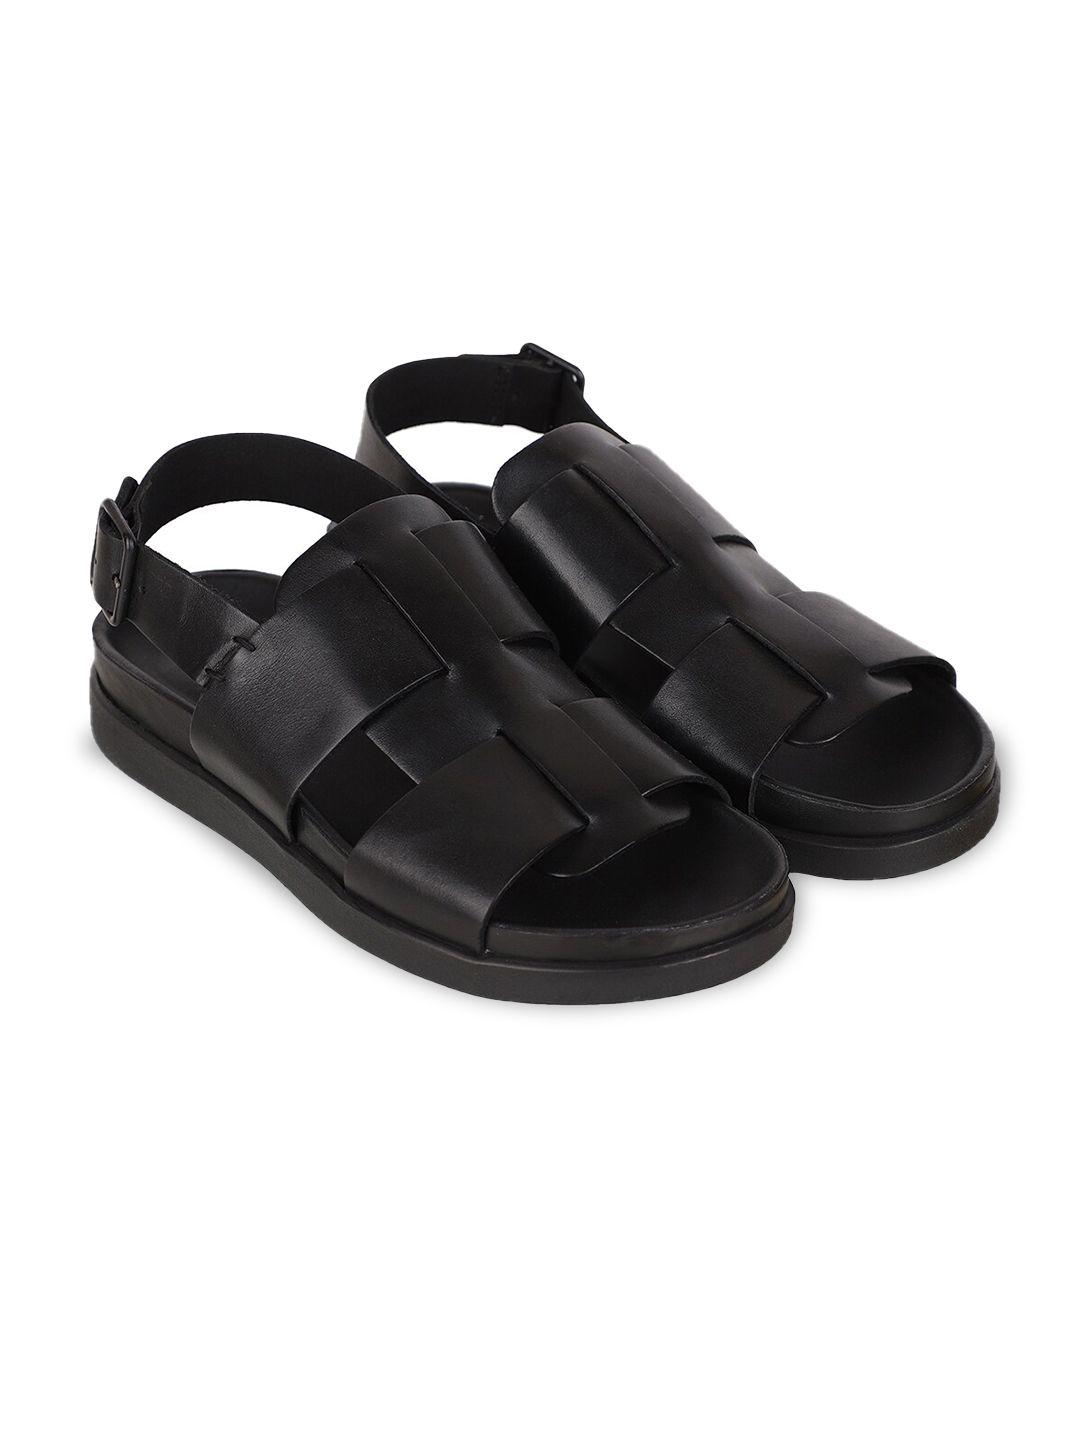 clarks-men-black-leather-comfort-sandals